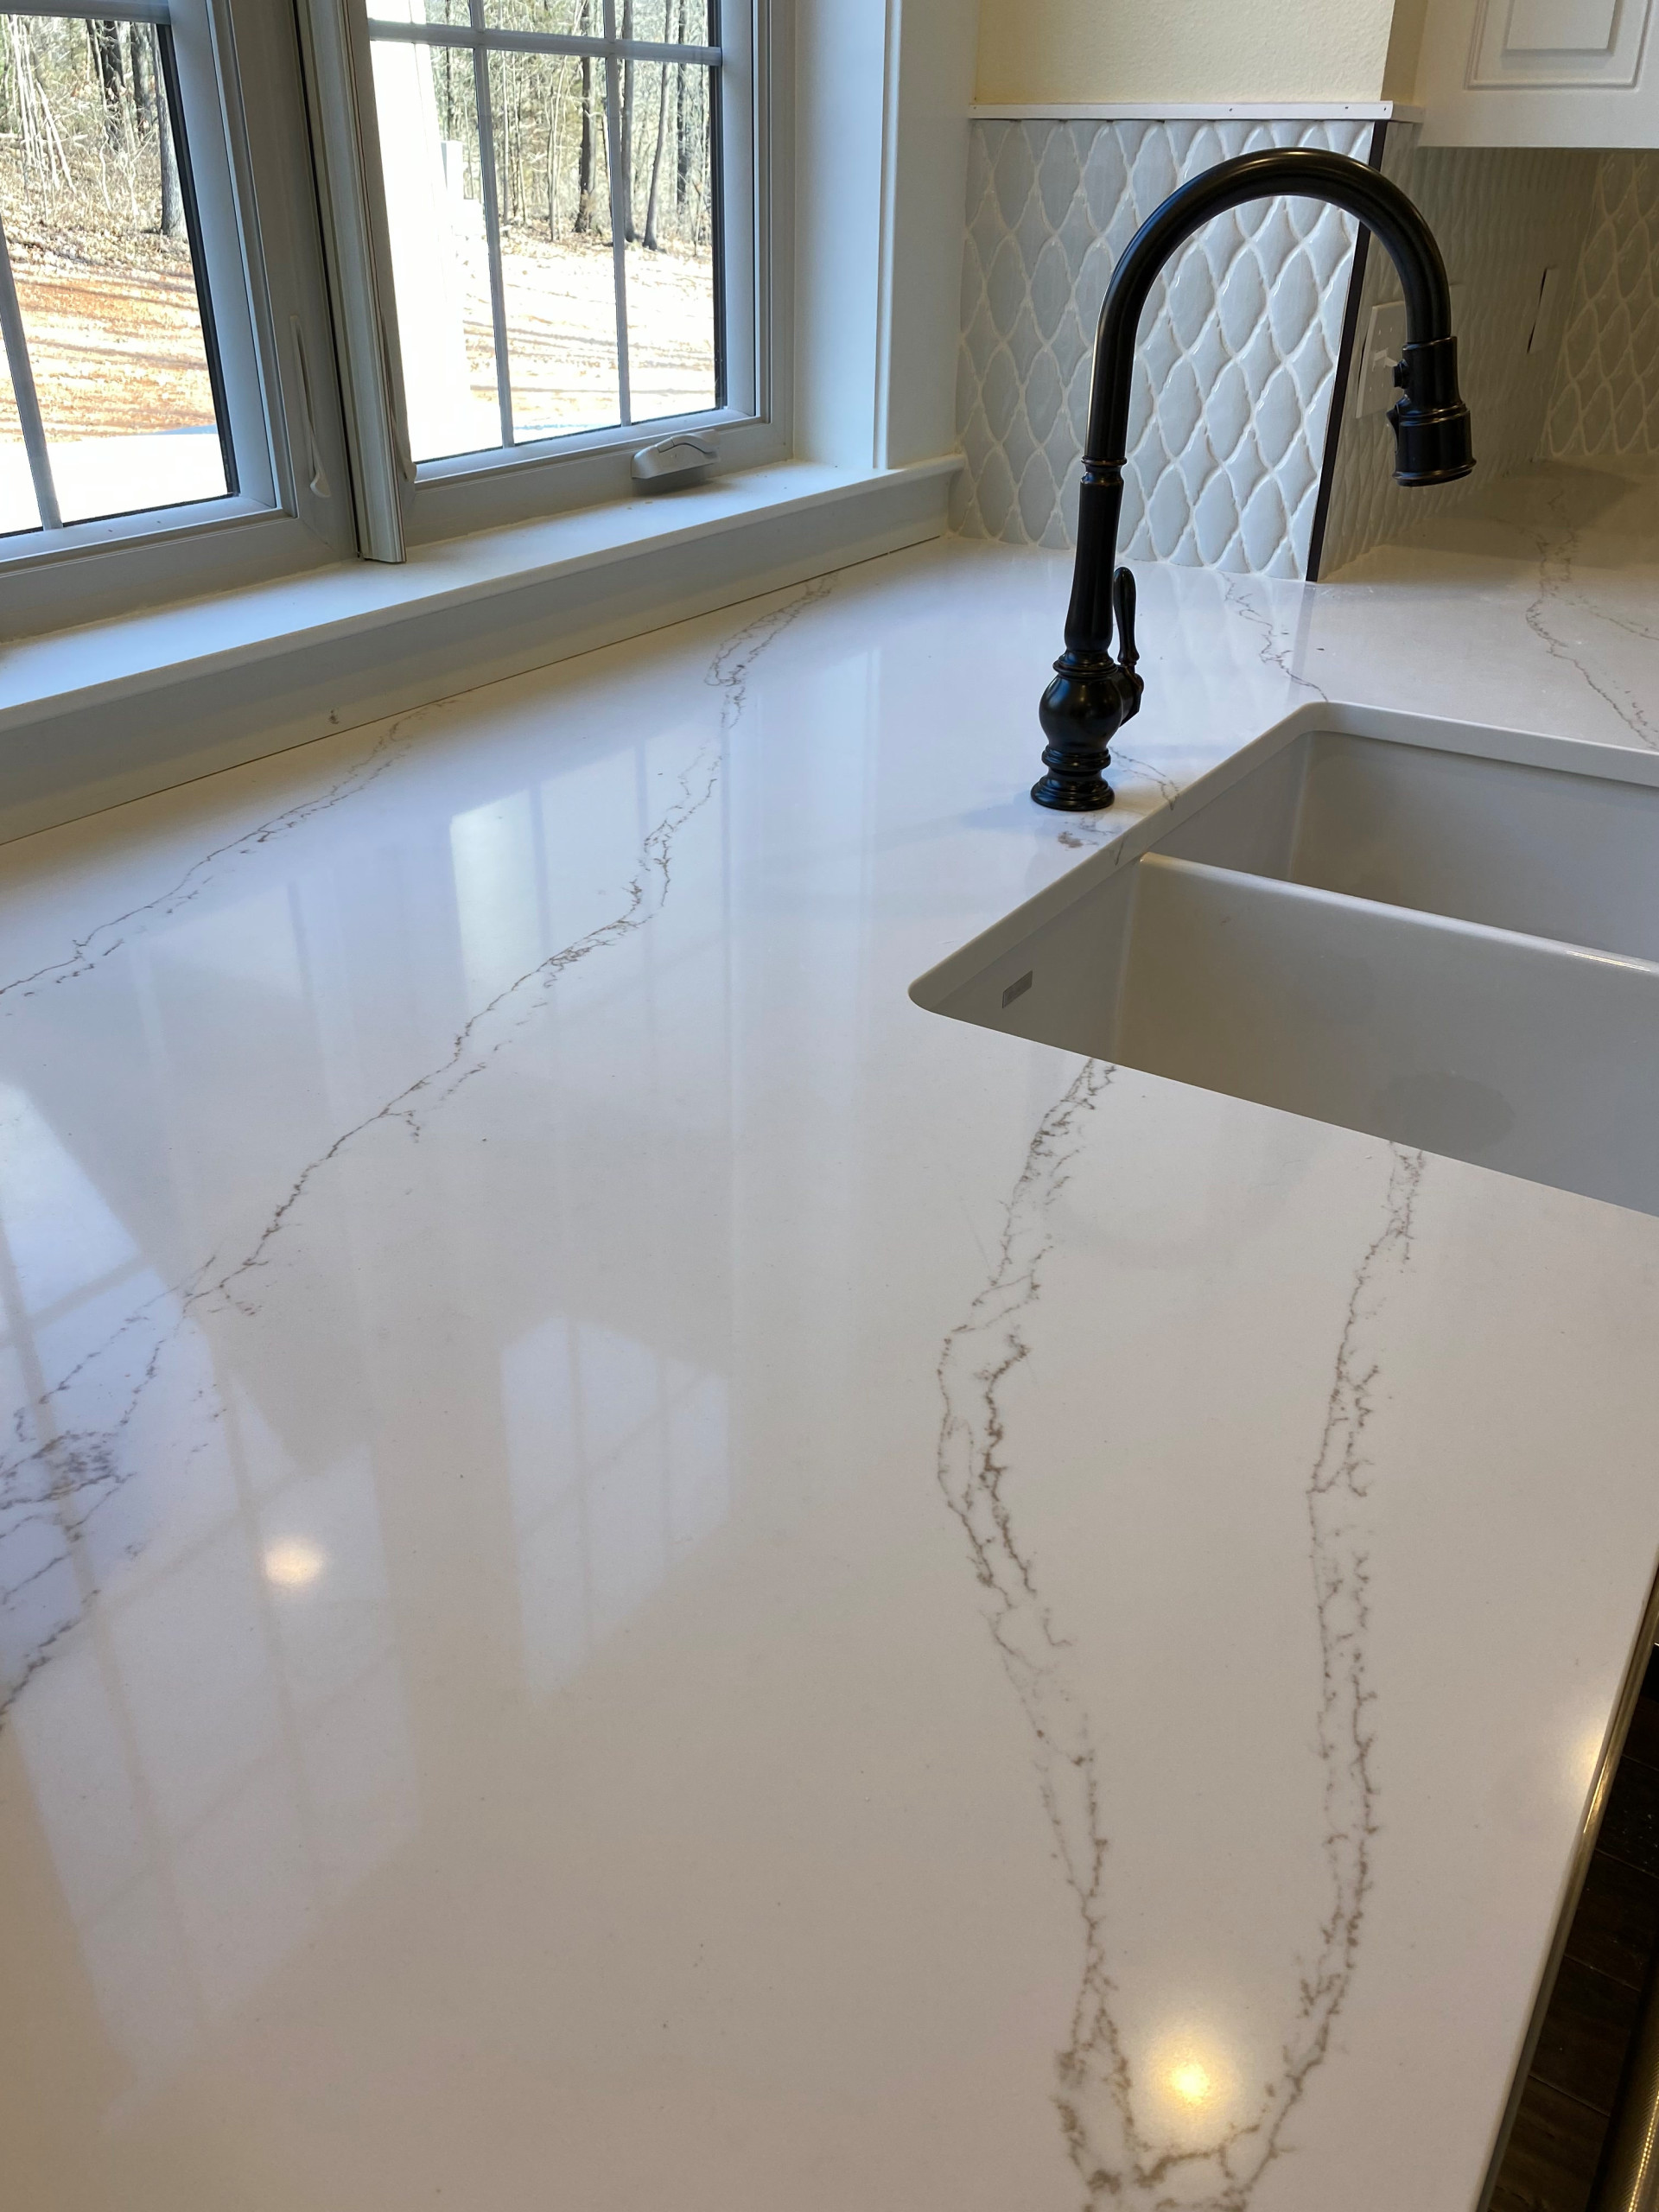 Kitchen quartz countertop and oil rubbed bronze pull down faucet